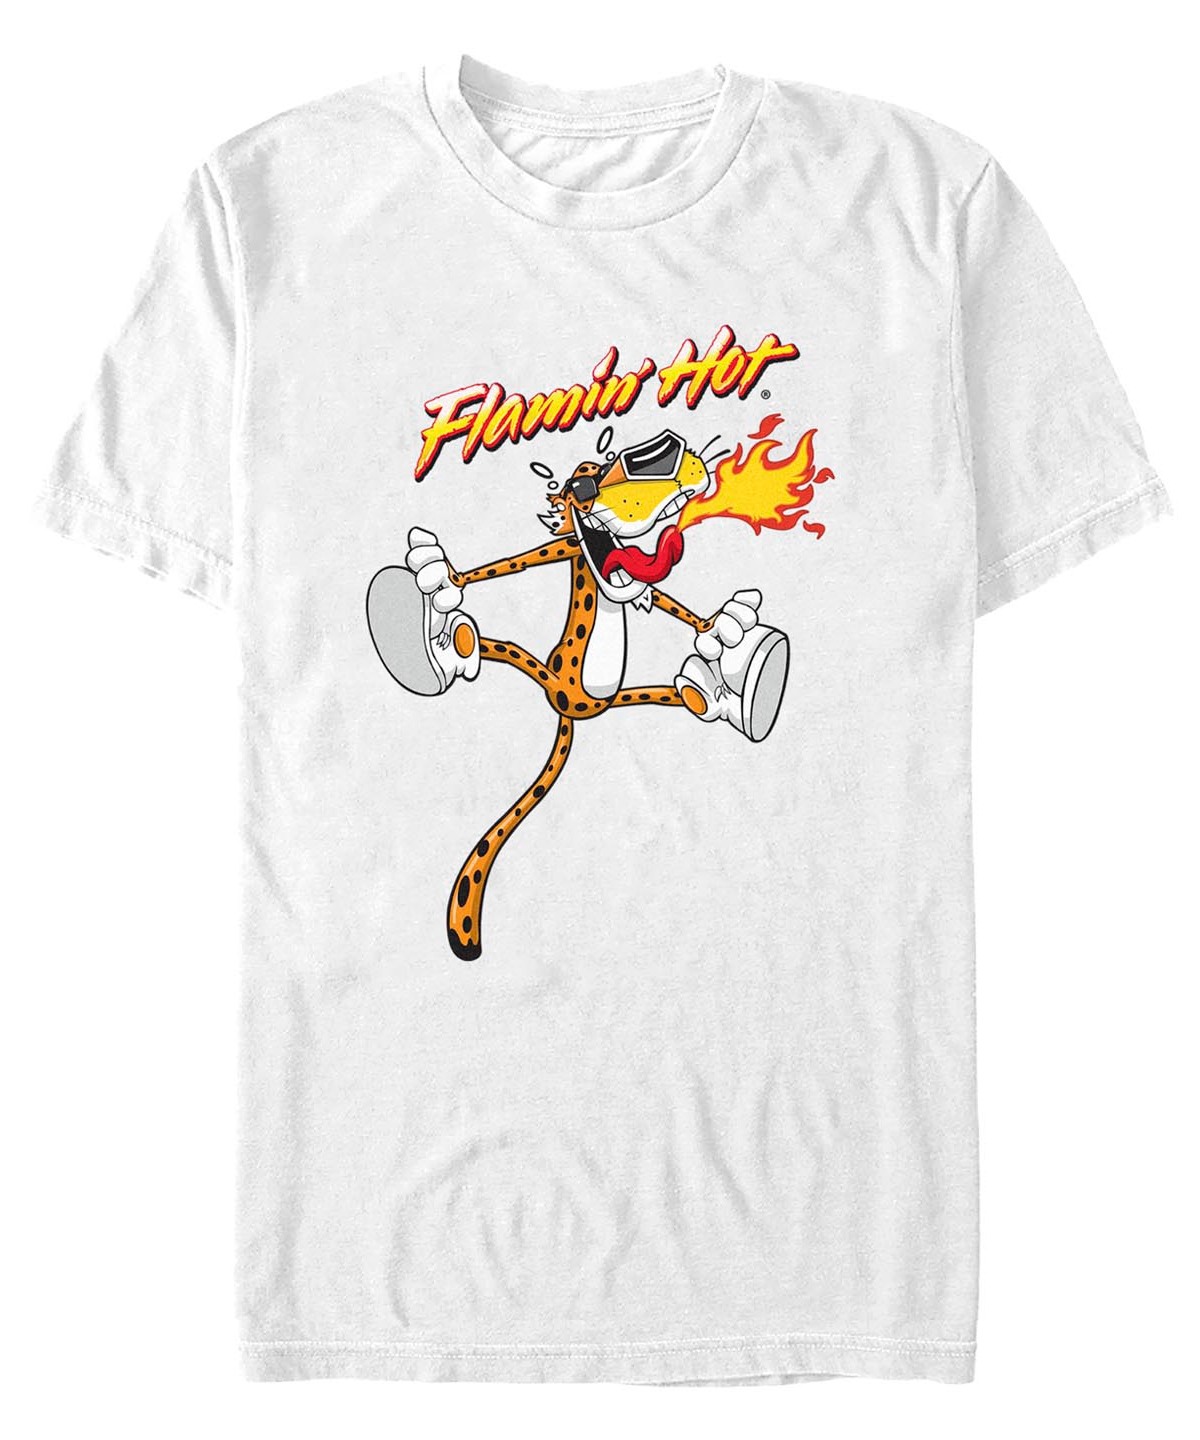 Fifth Sun Men's Flamin Hot Cheetos Short Sleeve T-shirt In White